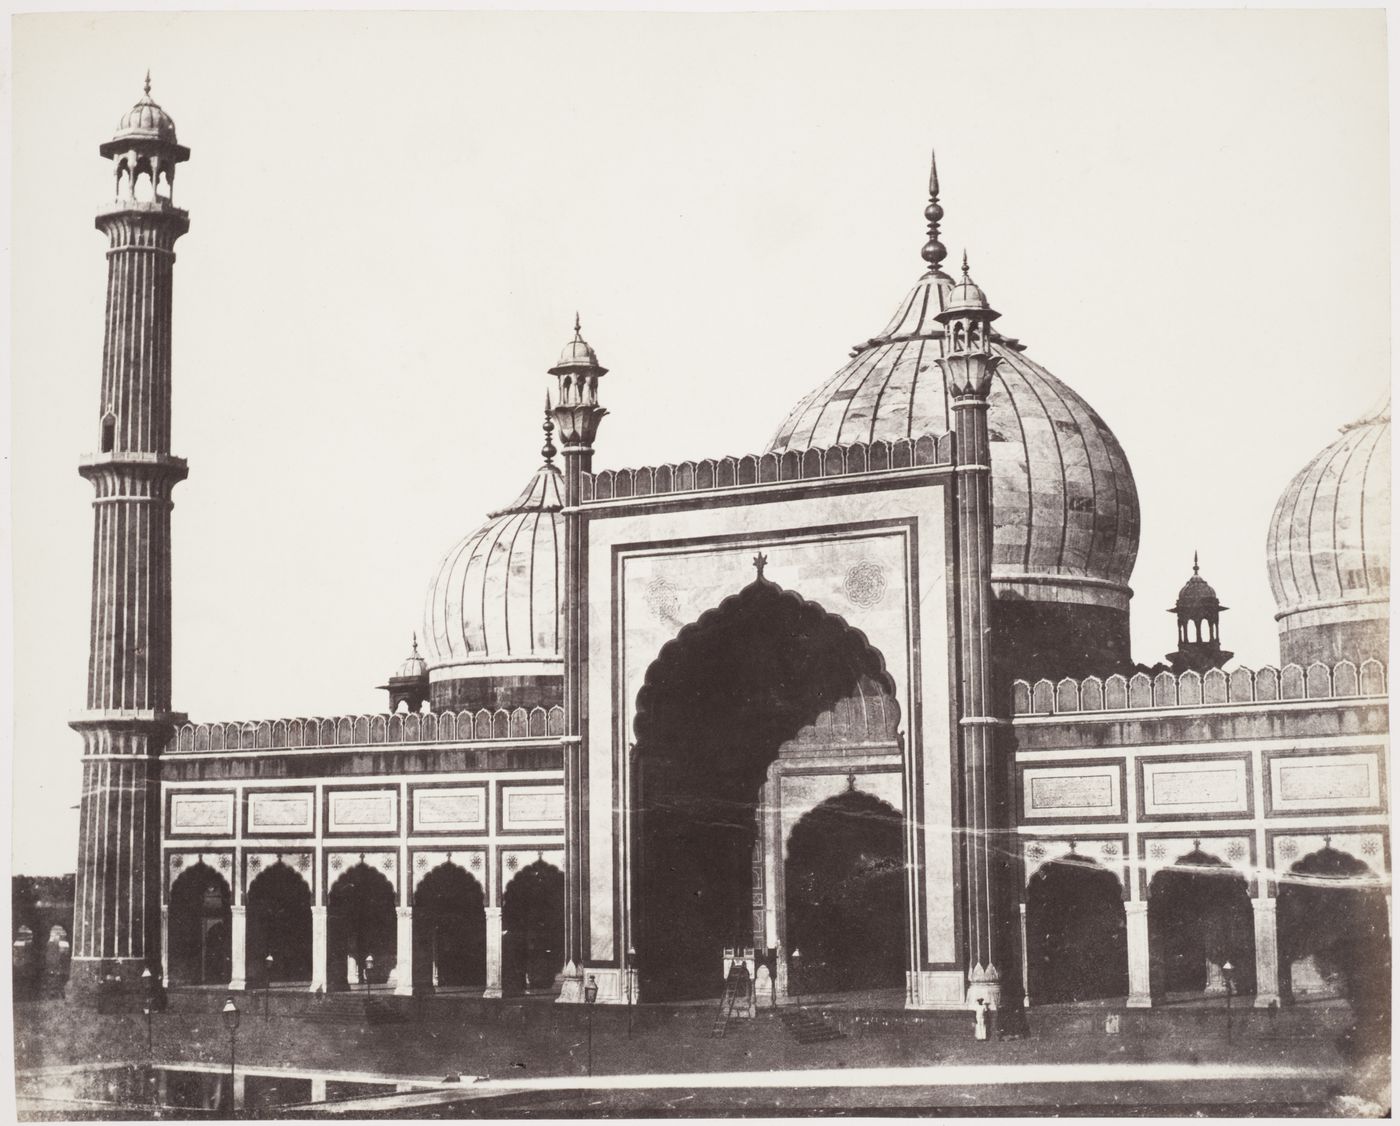 View of the Jami Masjid, Delhi (now Delhi Union Territory), India